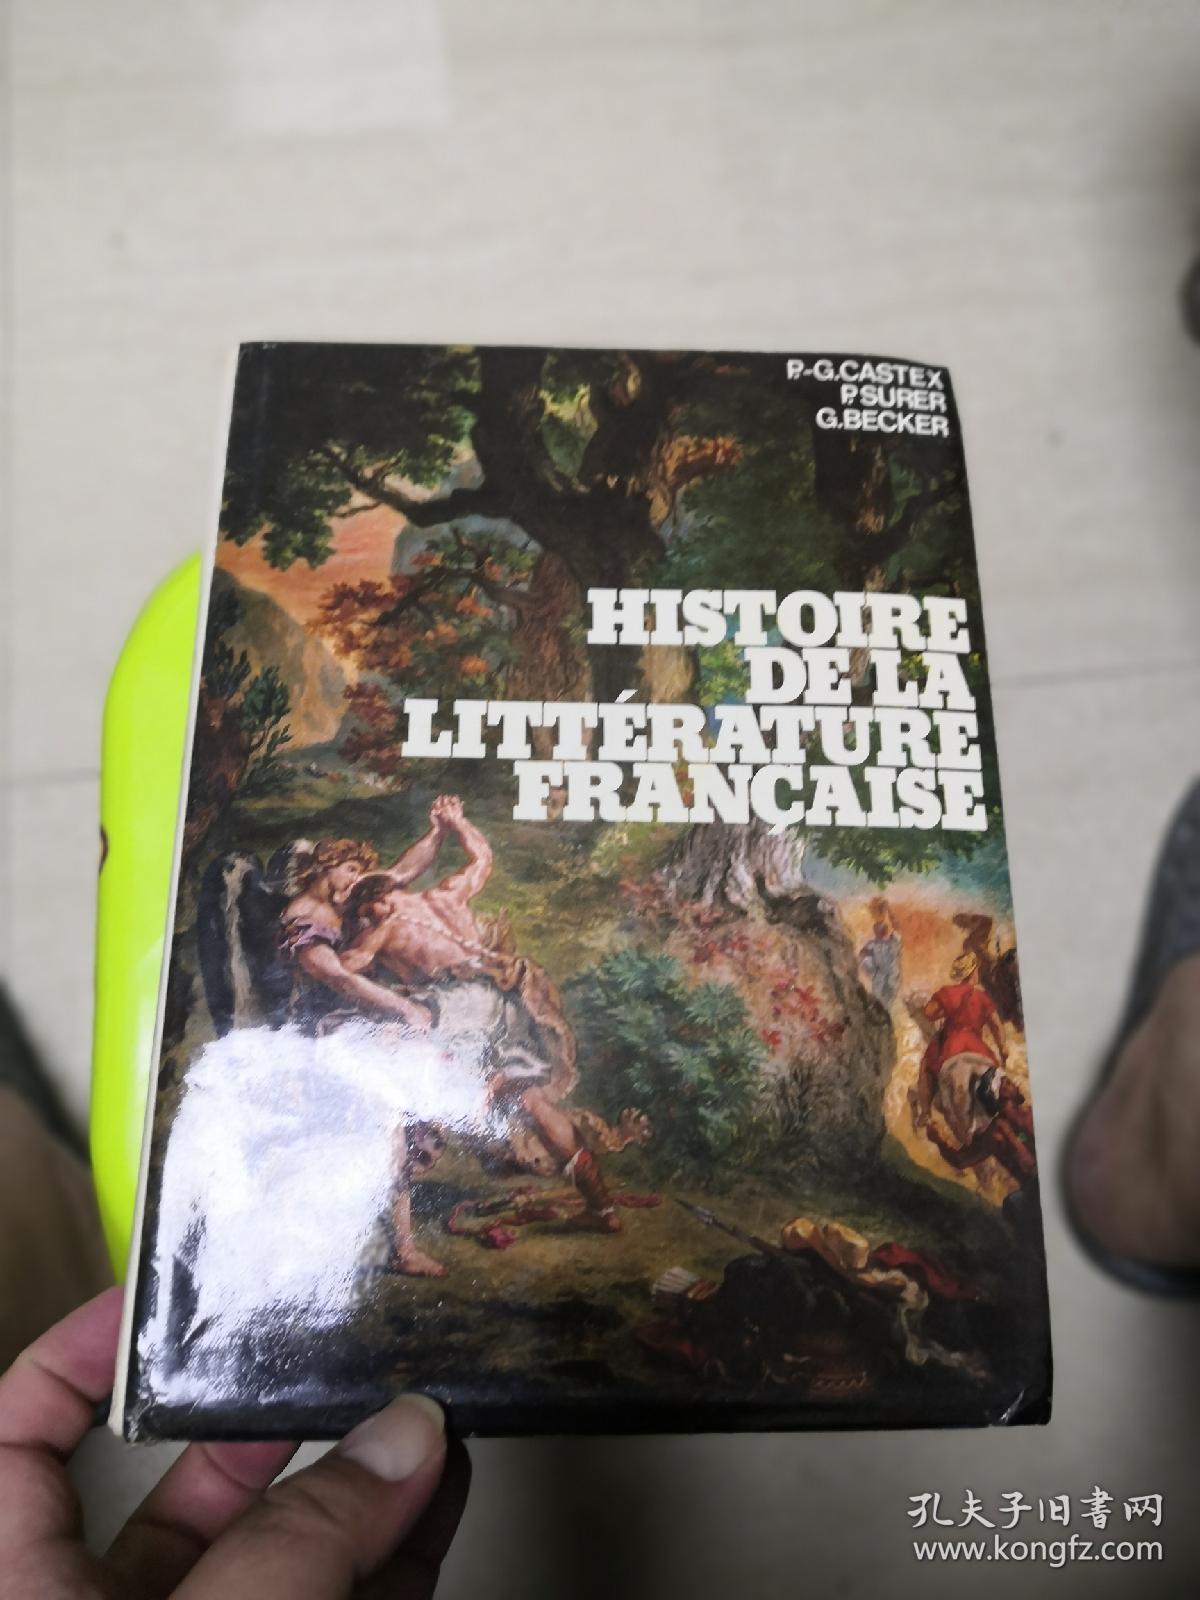 History de la literature francaise